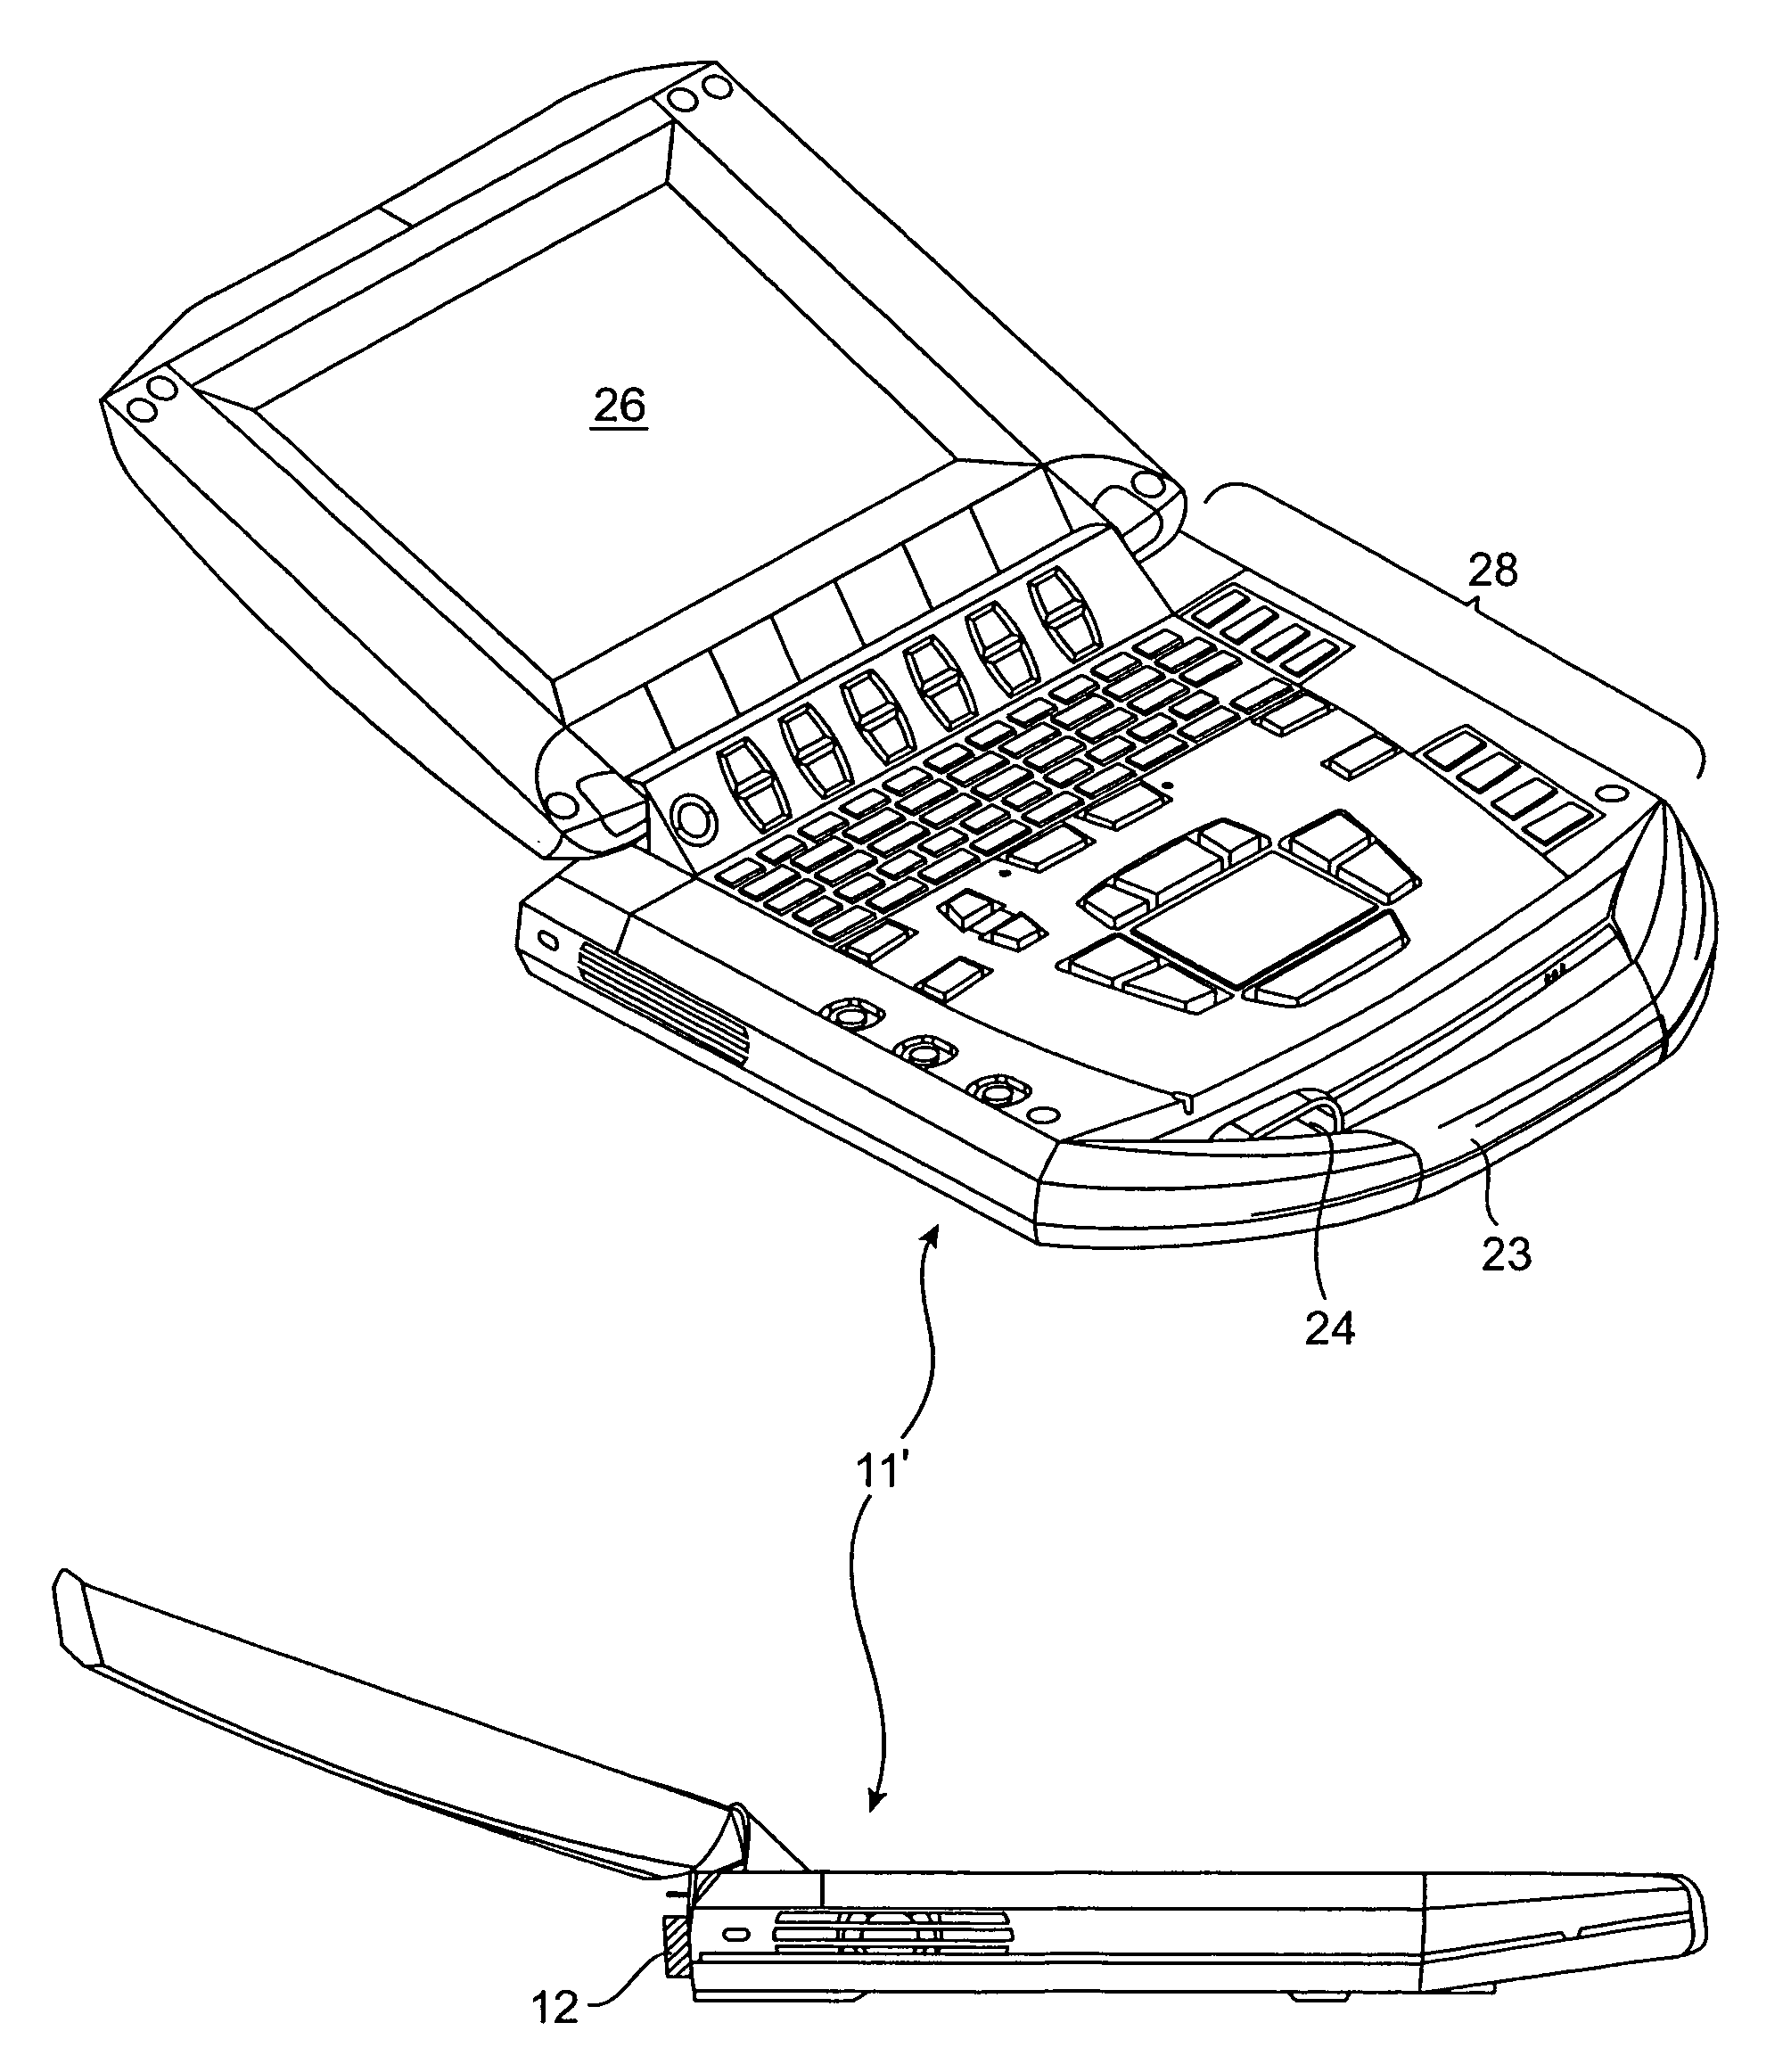 Modular apparatus for diagnostic ultrasound